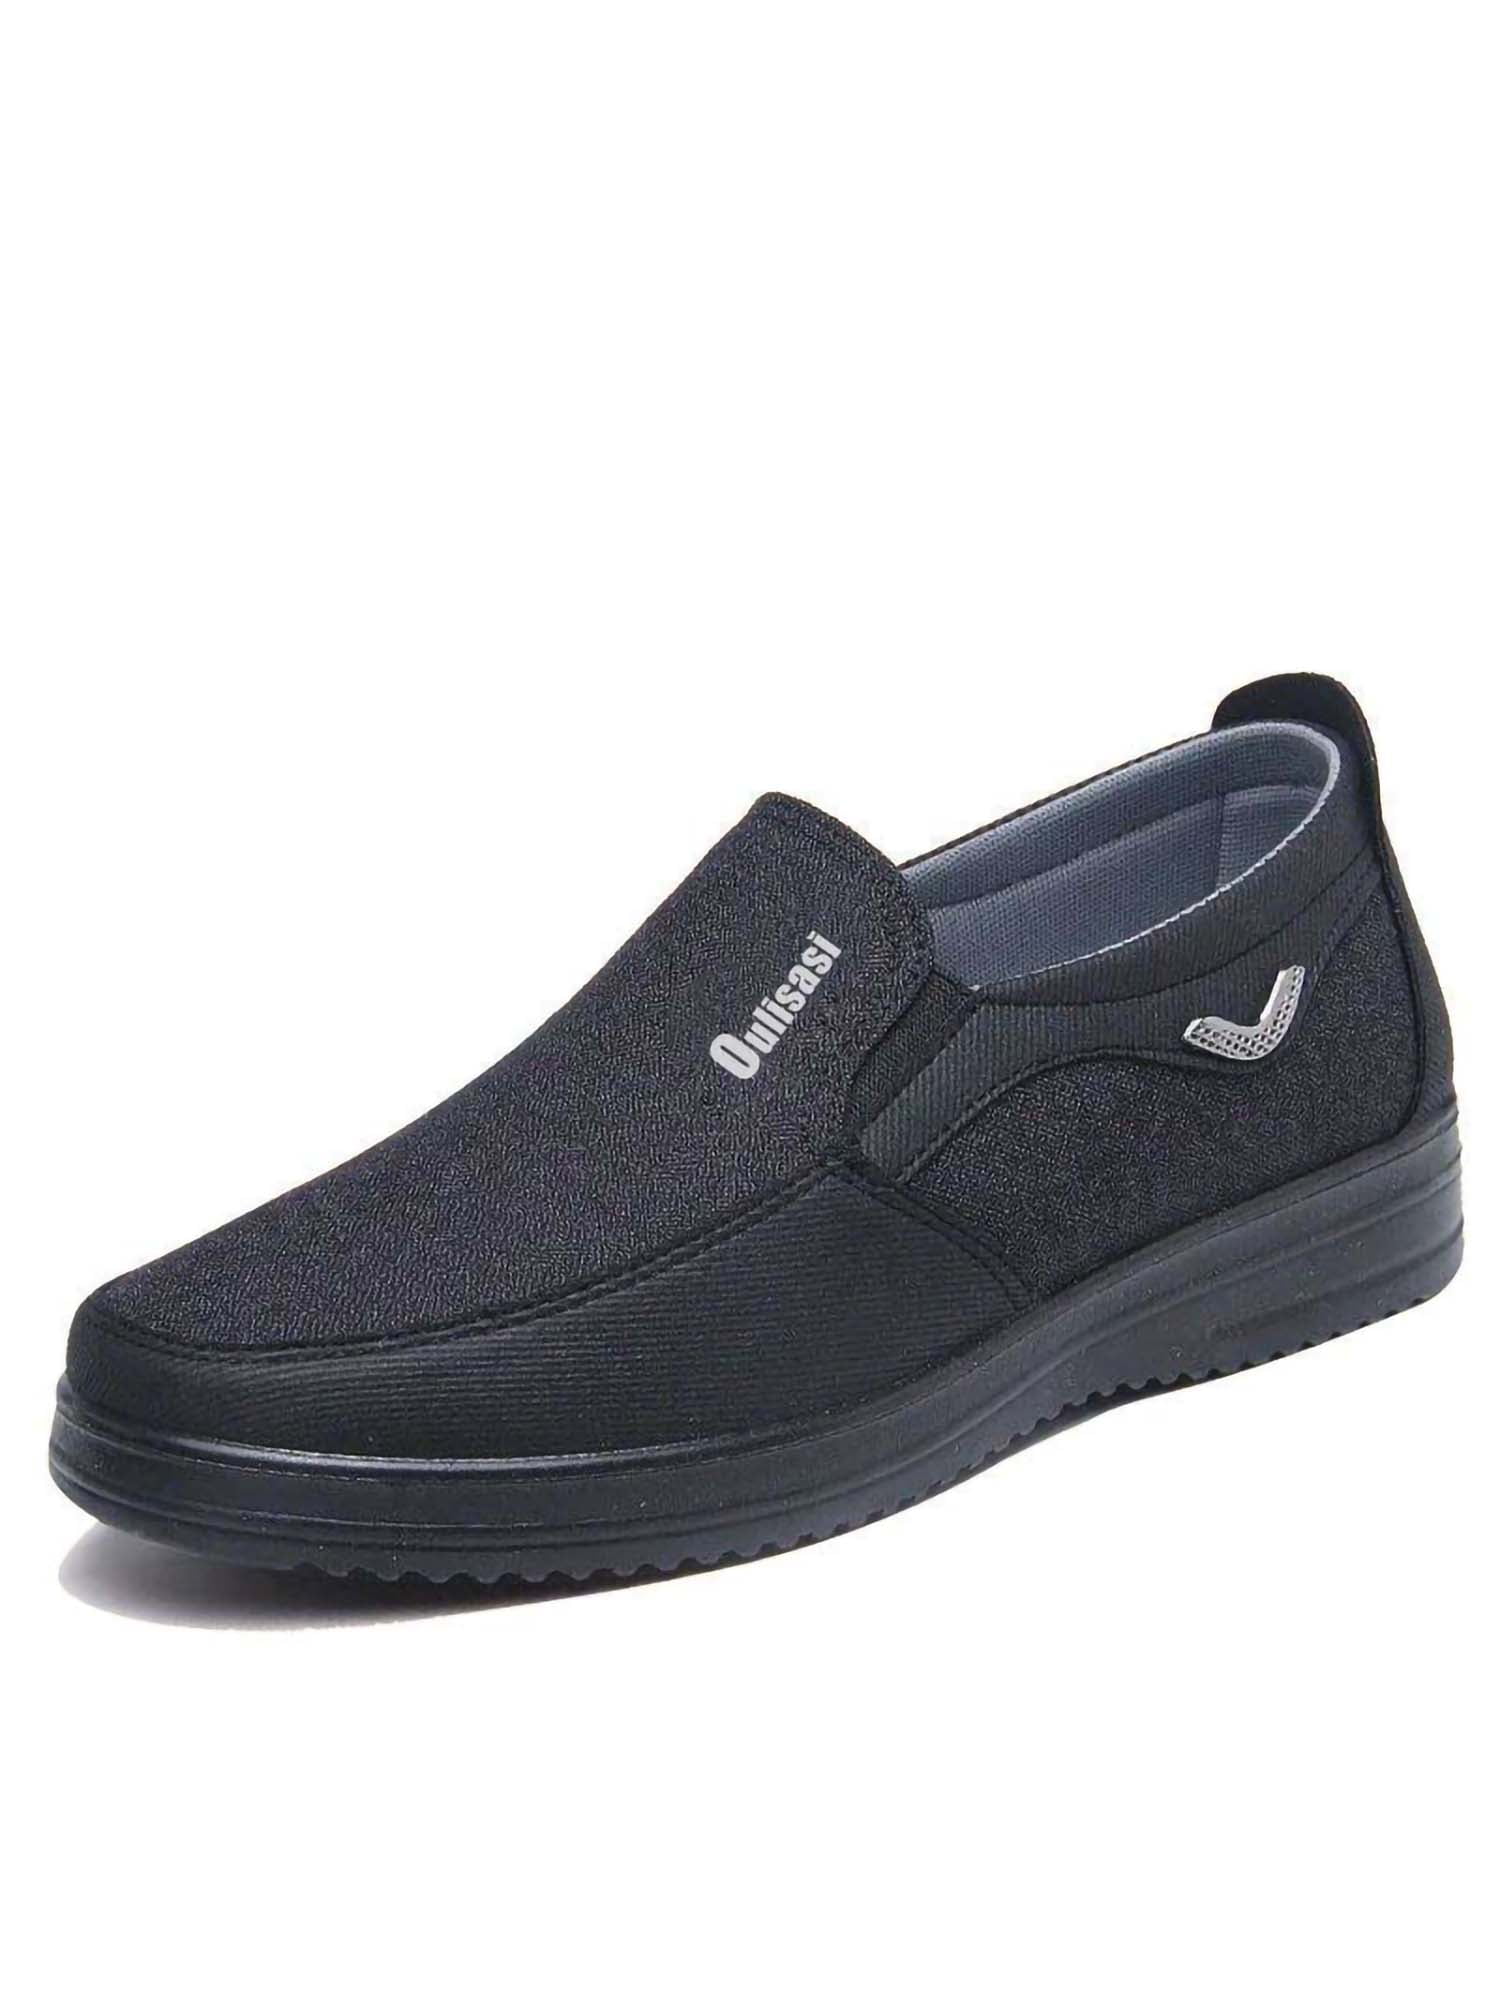 Daeful Men Running Shoe Slip On Sneakers Flat Athletic Shoes Walking ...